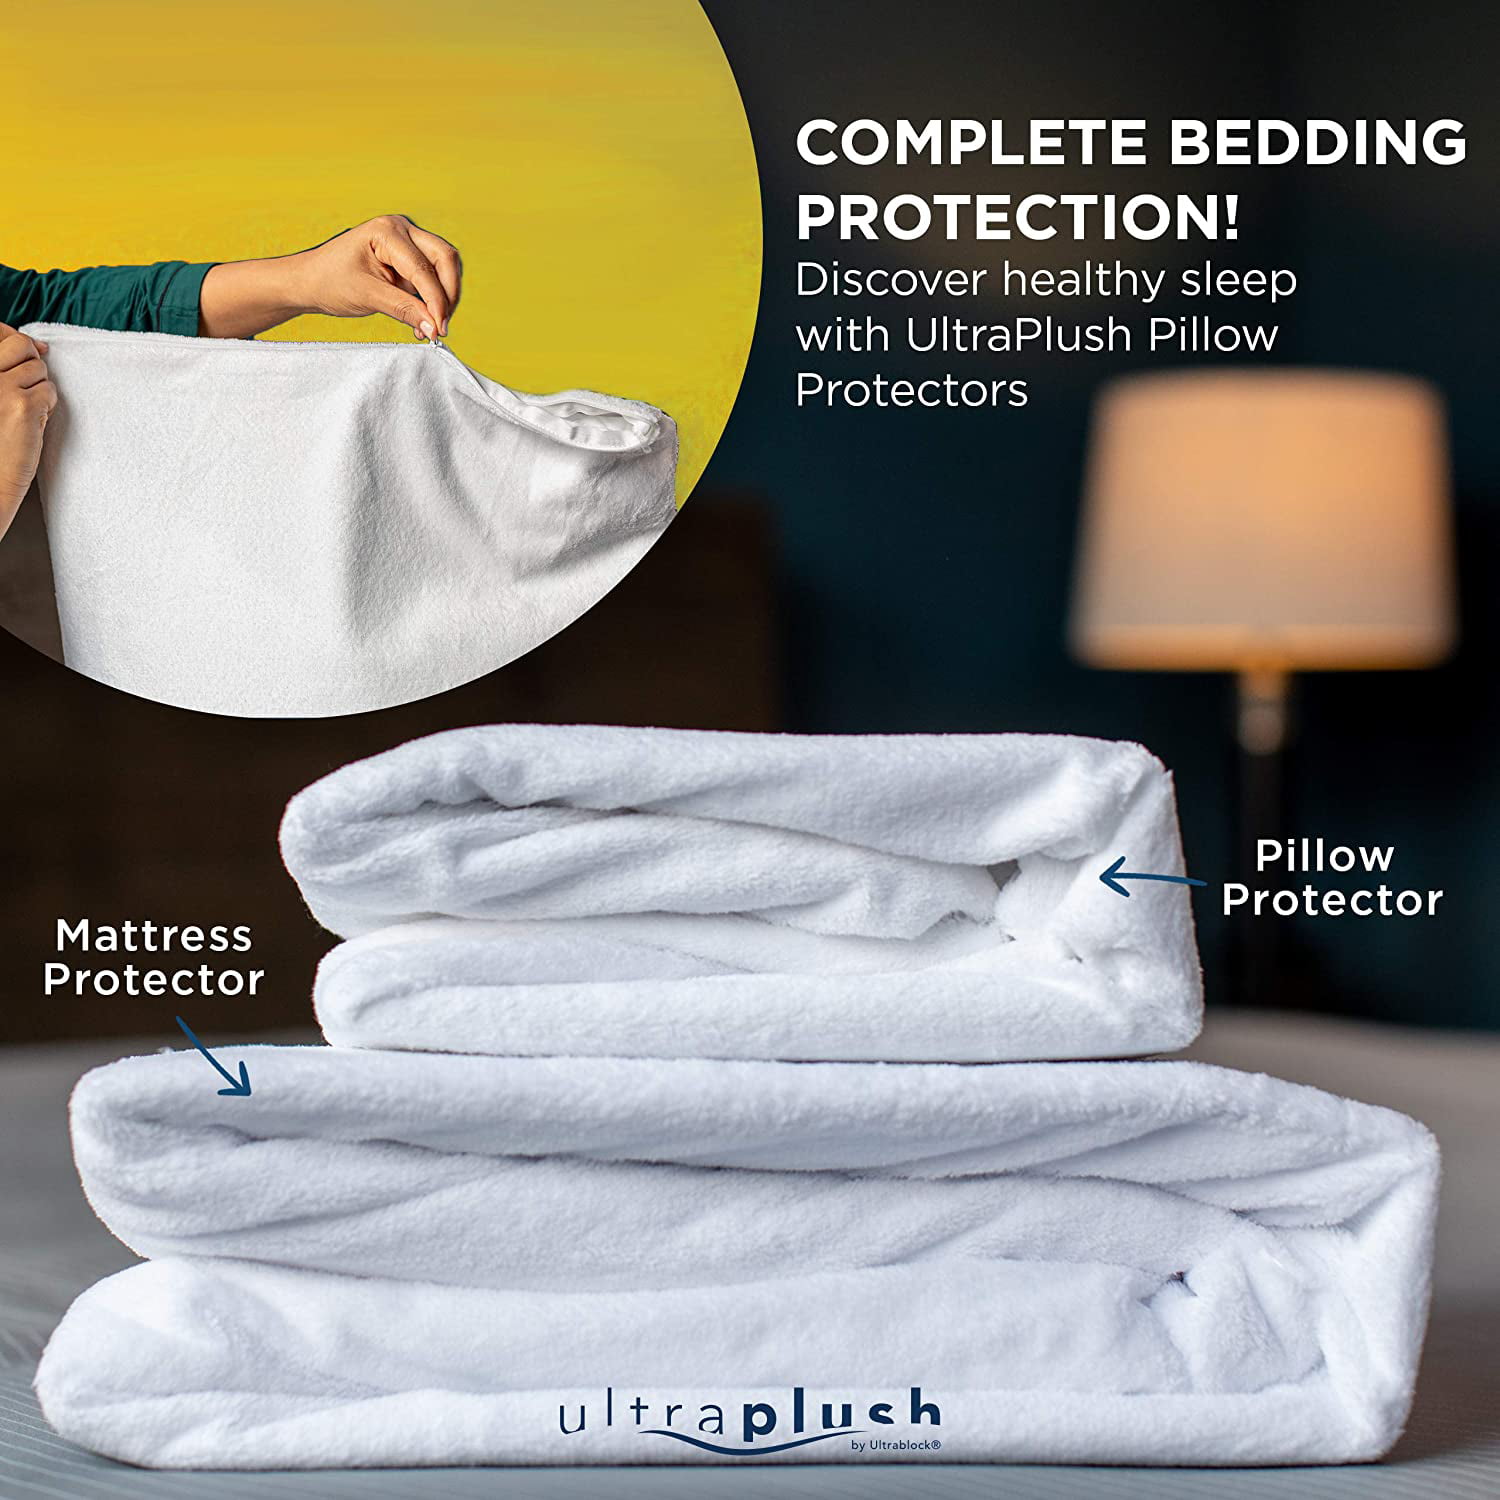 Super Soft Quiet Cover UltraPlush Premium California King Waterproof Mattress Protector